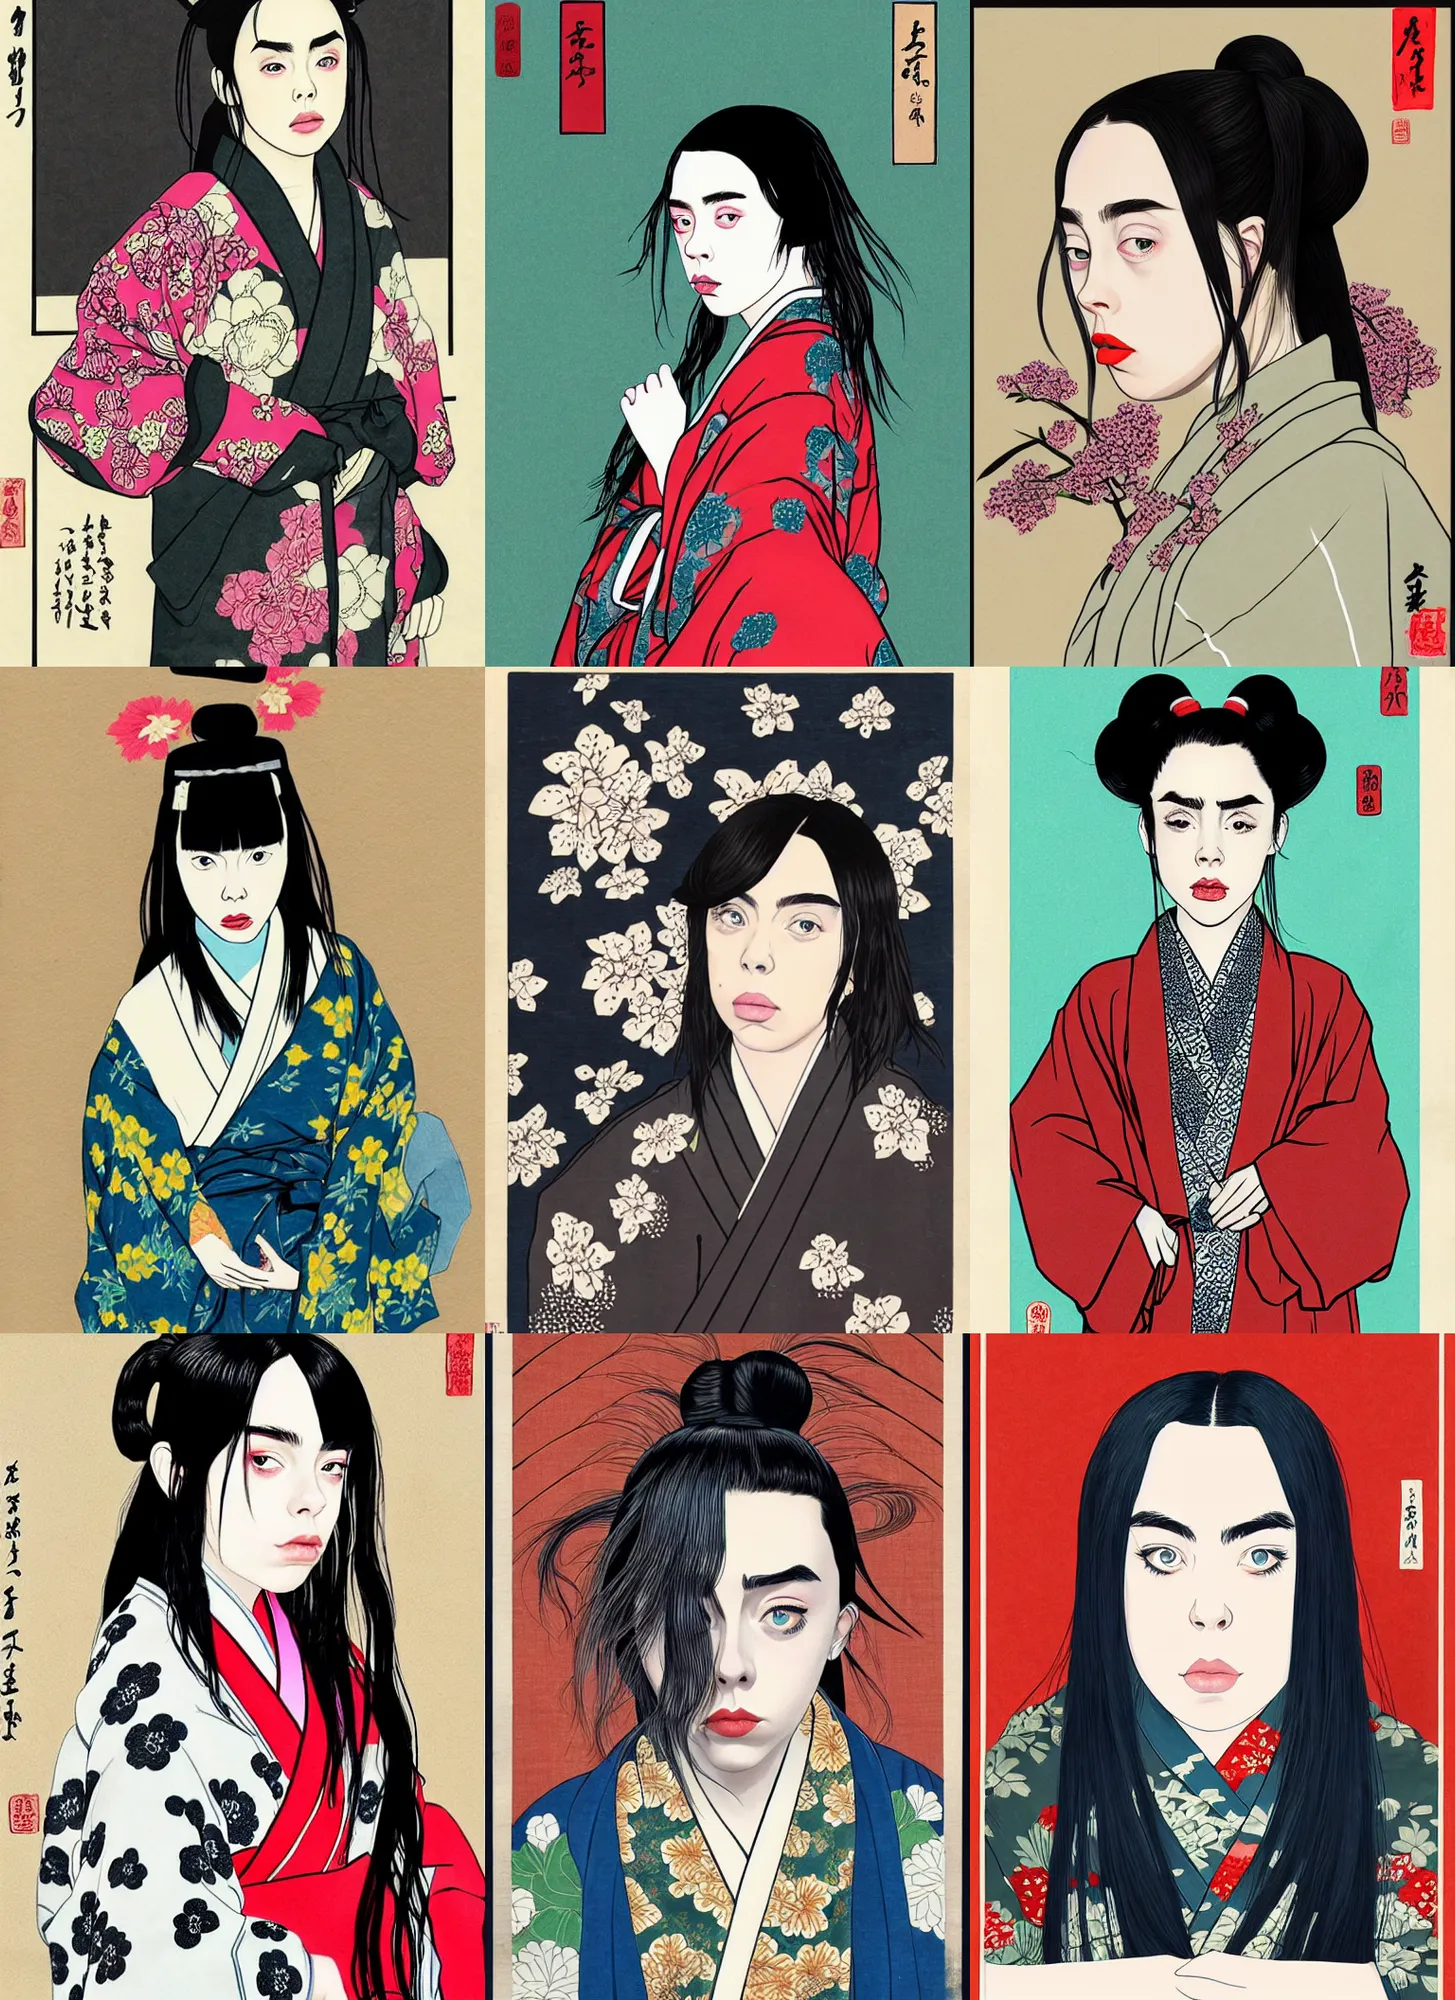 Prompt: a portrait of billie eilish wearing a kimono. shin - hanga.